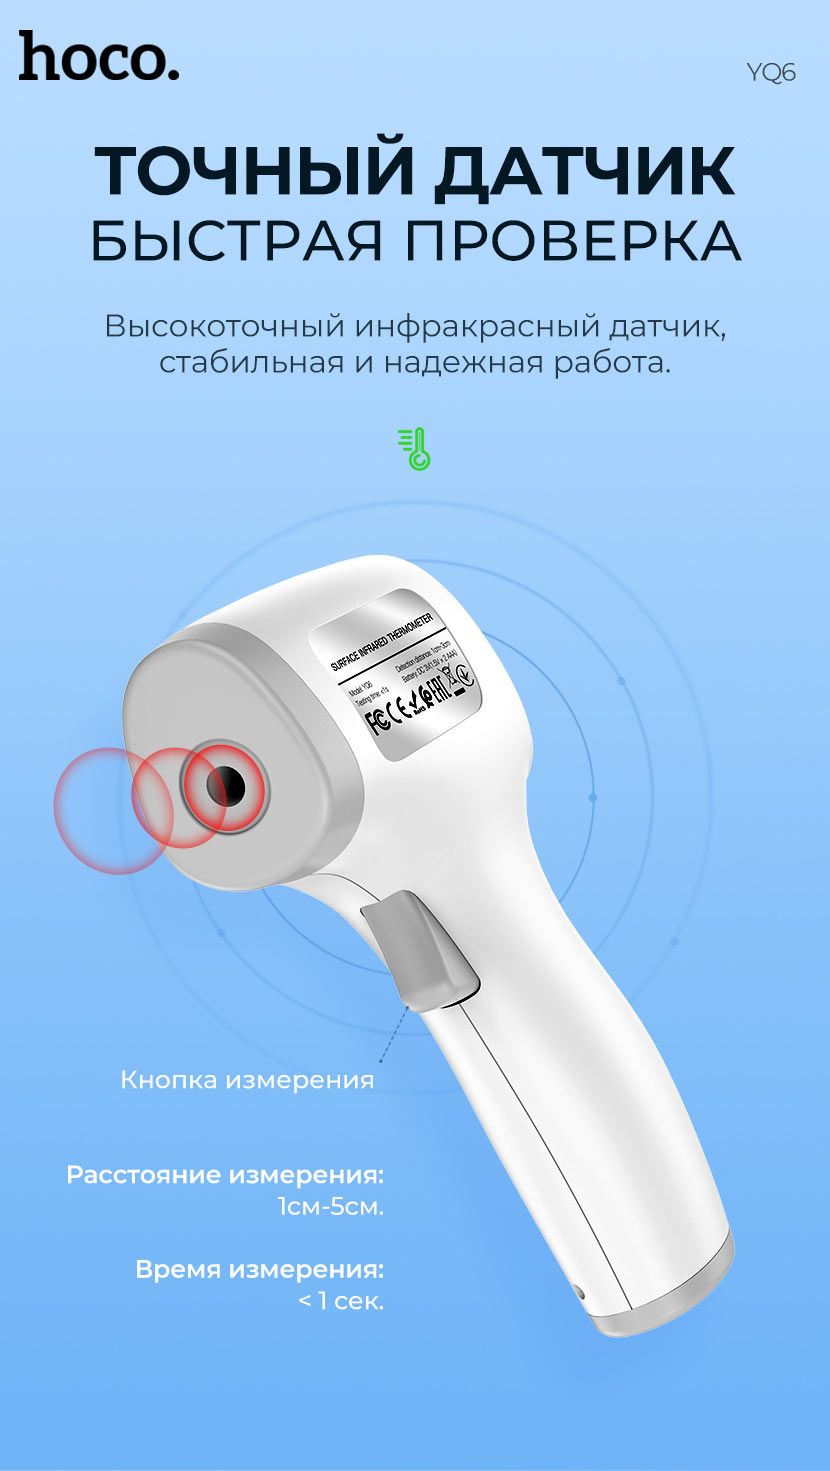 hoco-news-yq6-infrared-thermometer-sensor-ru.jpg